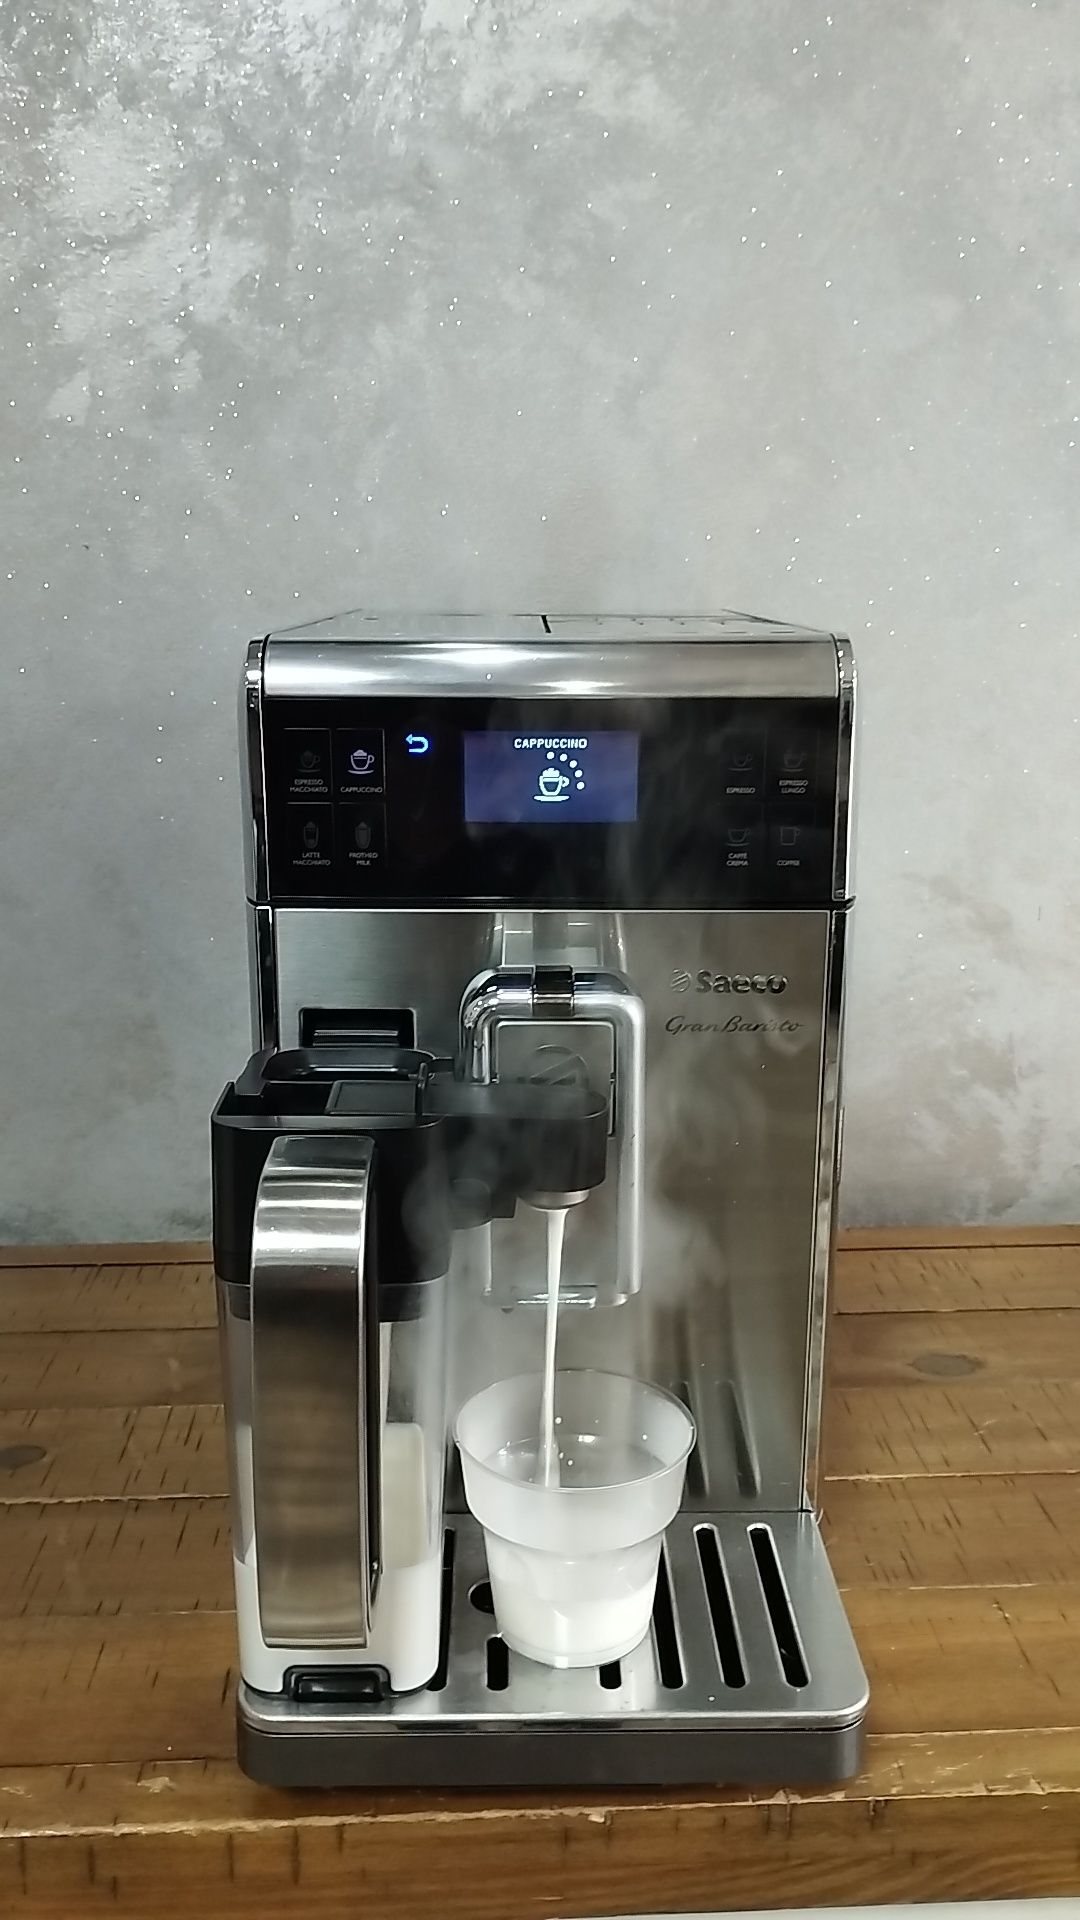 Aparat espressor de cafea Saeco Gran Baristo/Cappuccino